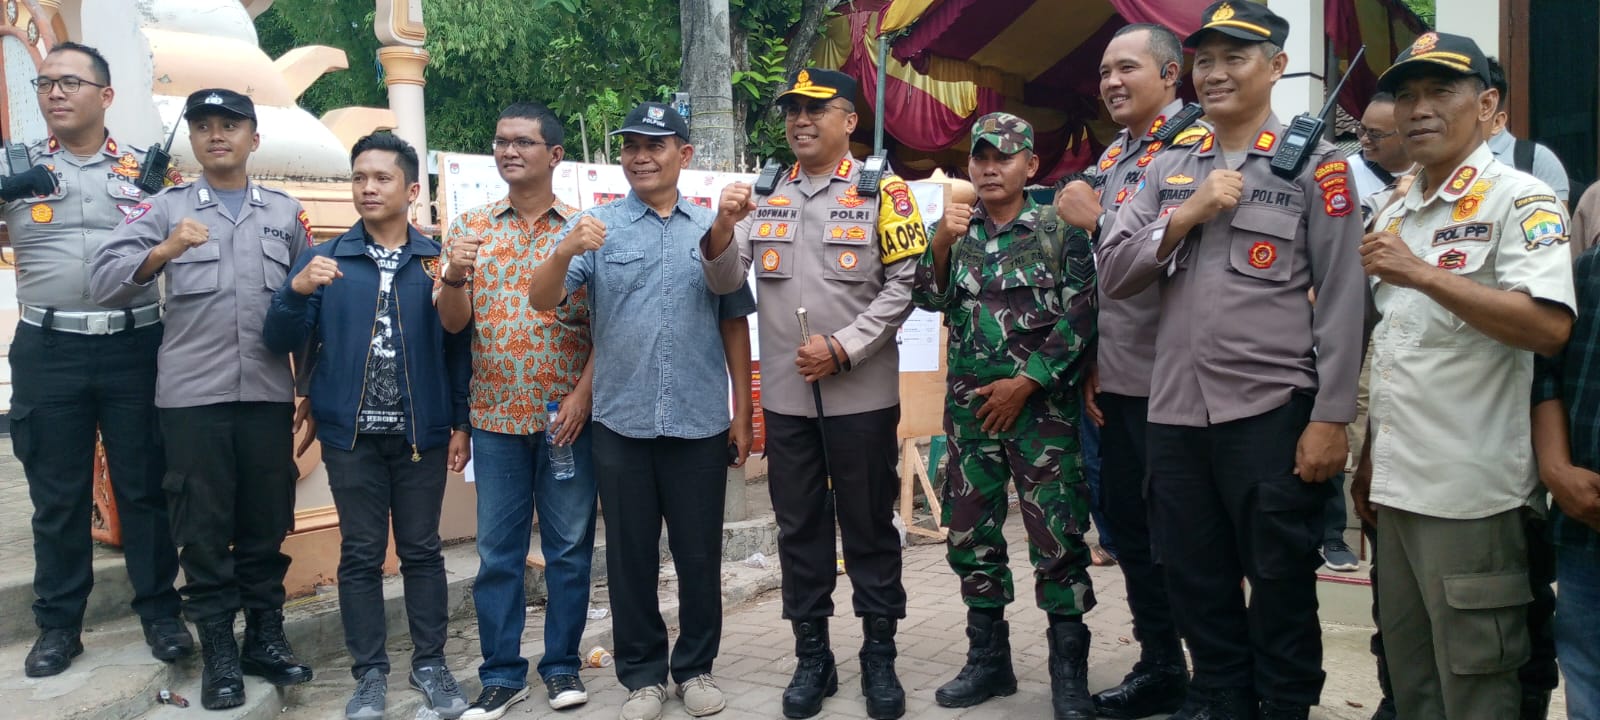 Muspika kecamatan Kasemen monitoring Psu Tps 21 Kp lelorog kelurahan bendung.